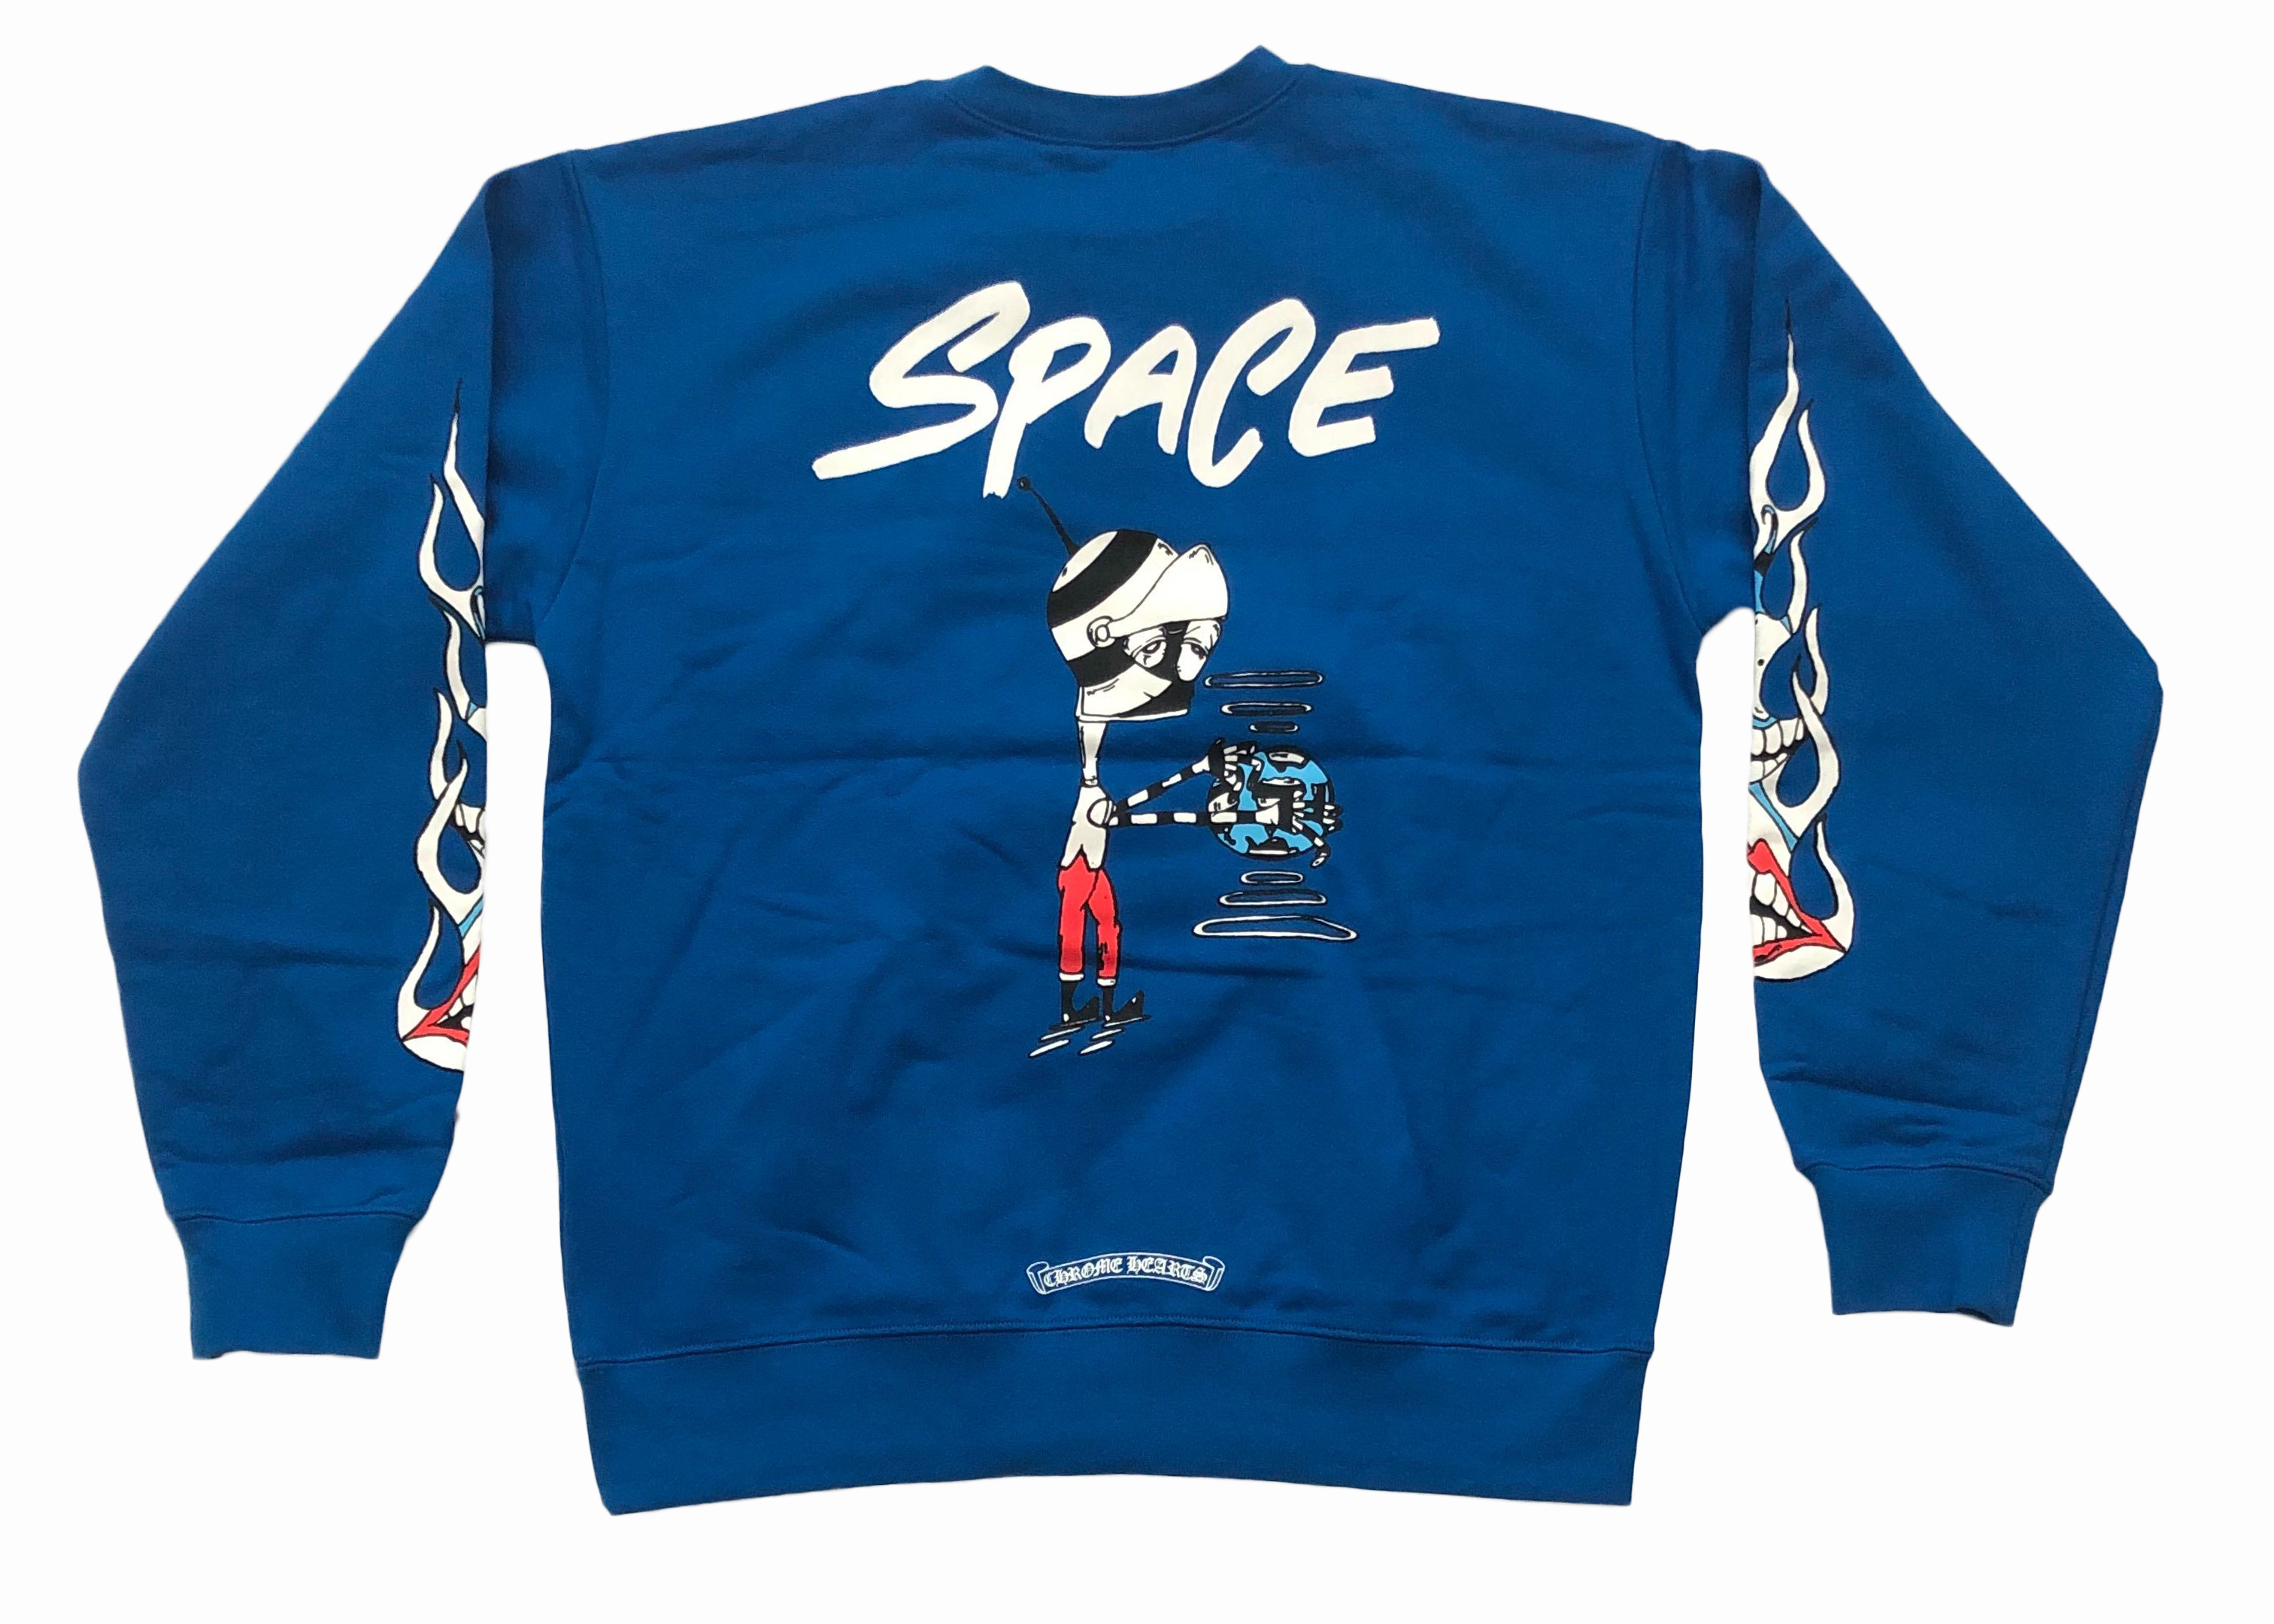 Chrome Hearts Matty Boy Space Crewneck Sweatshirt Blue Men's - US